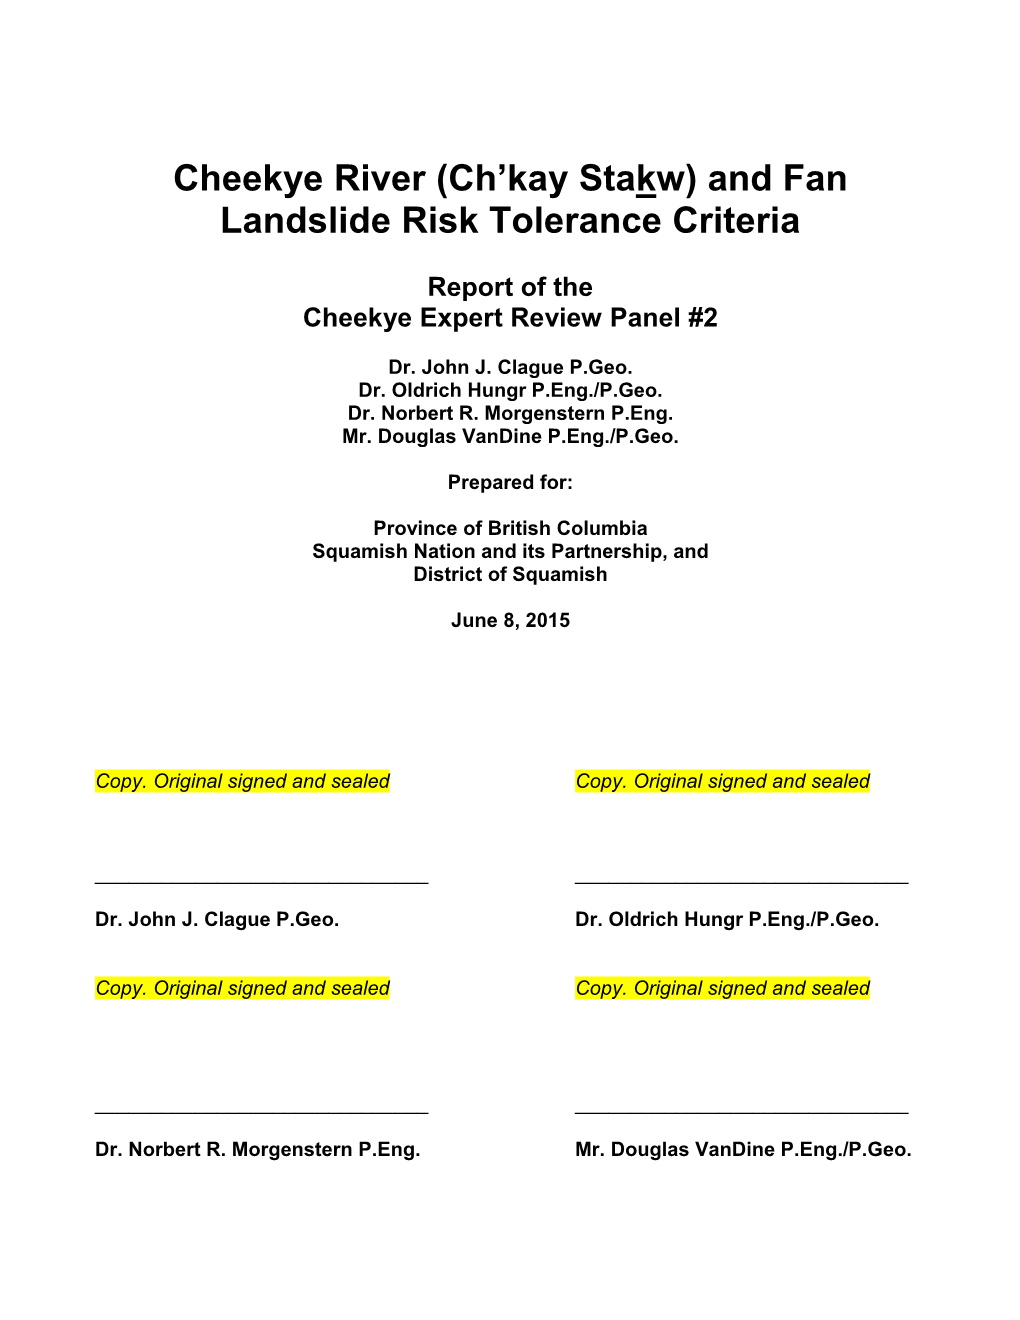 Cheekye River (Ch'kay Stakw) and Fan Landslide Risk Tolerance Criteria